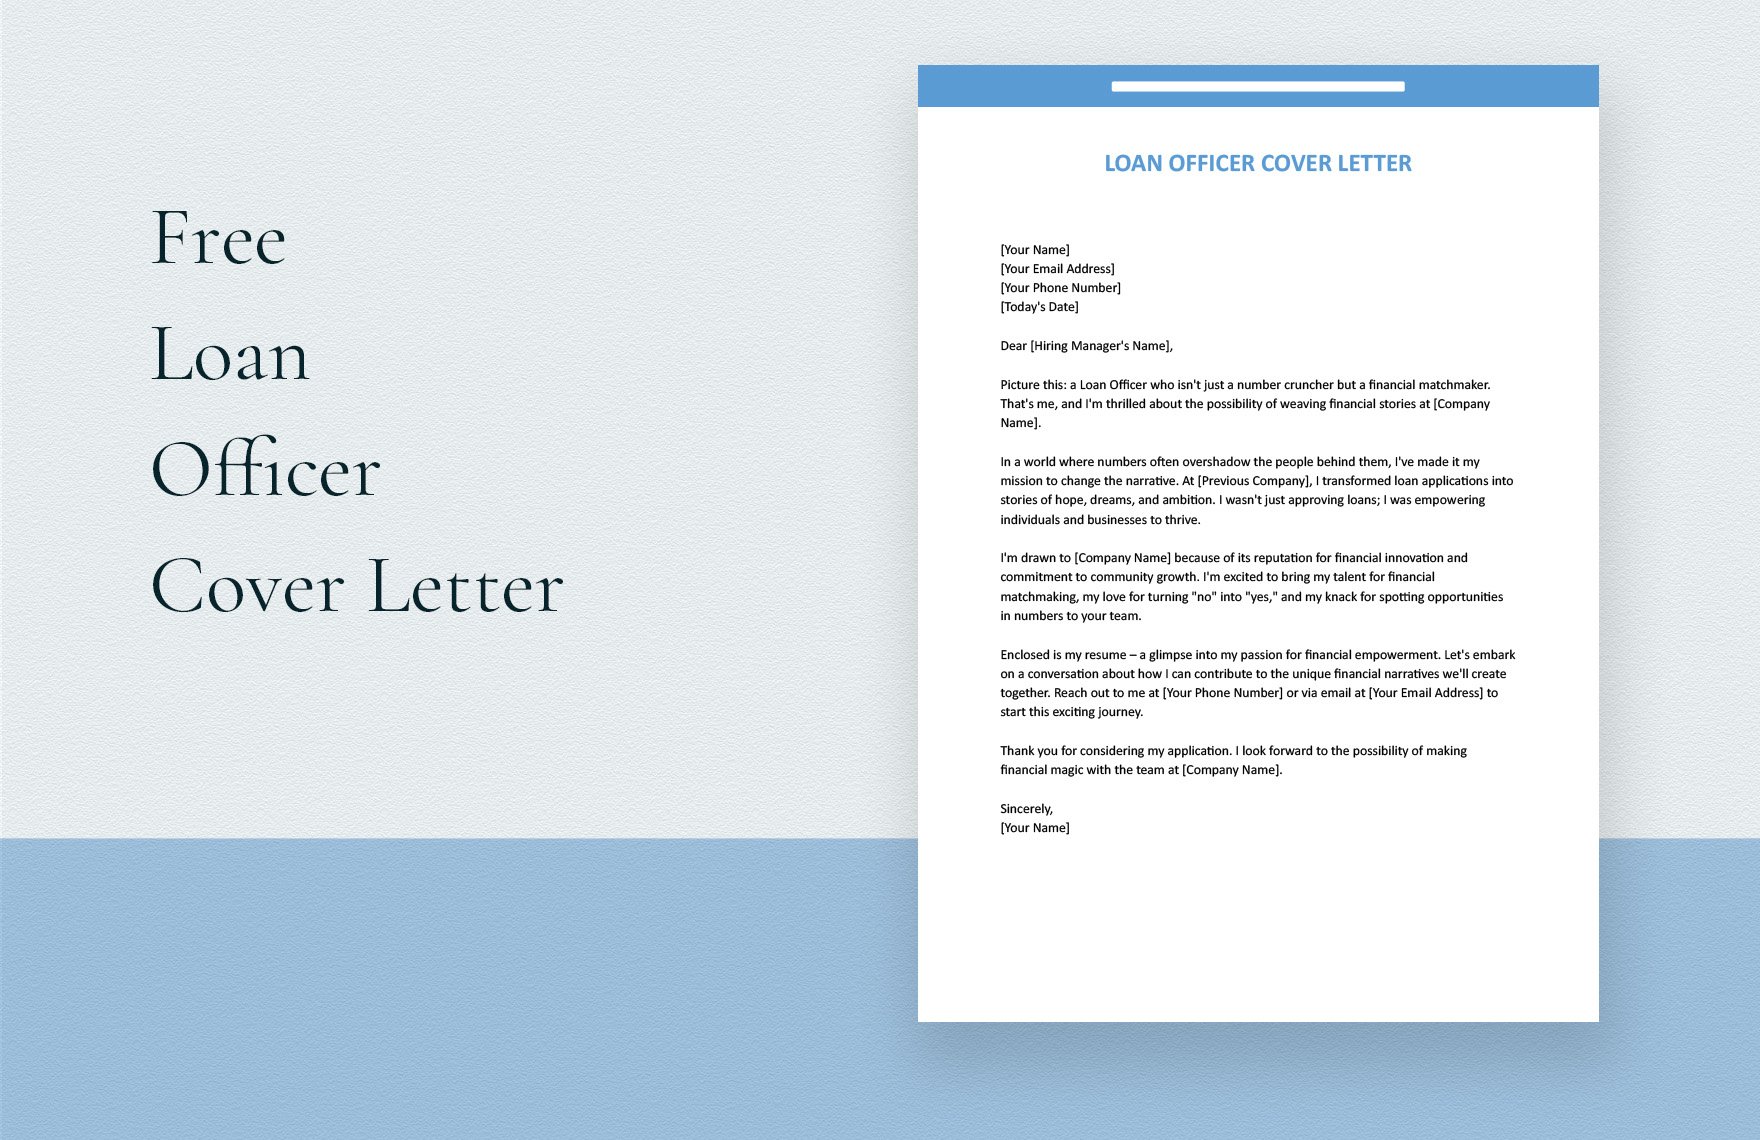 Loan Officer Cover Letter in Word, Google Docs